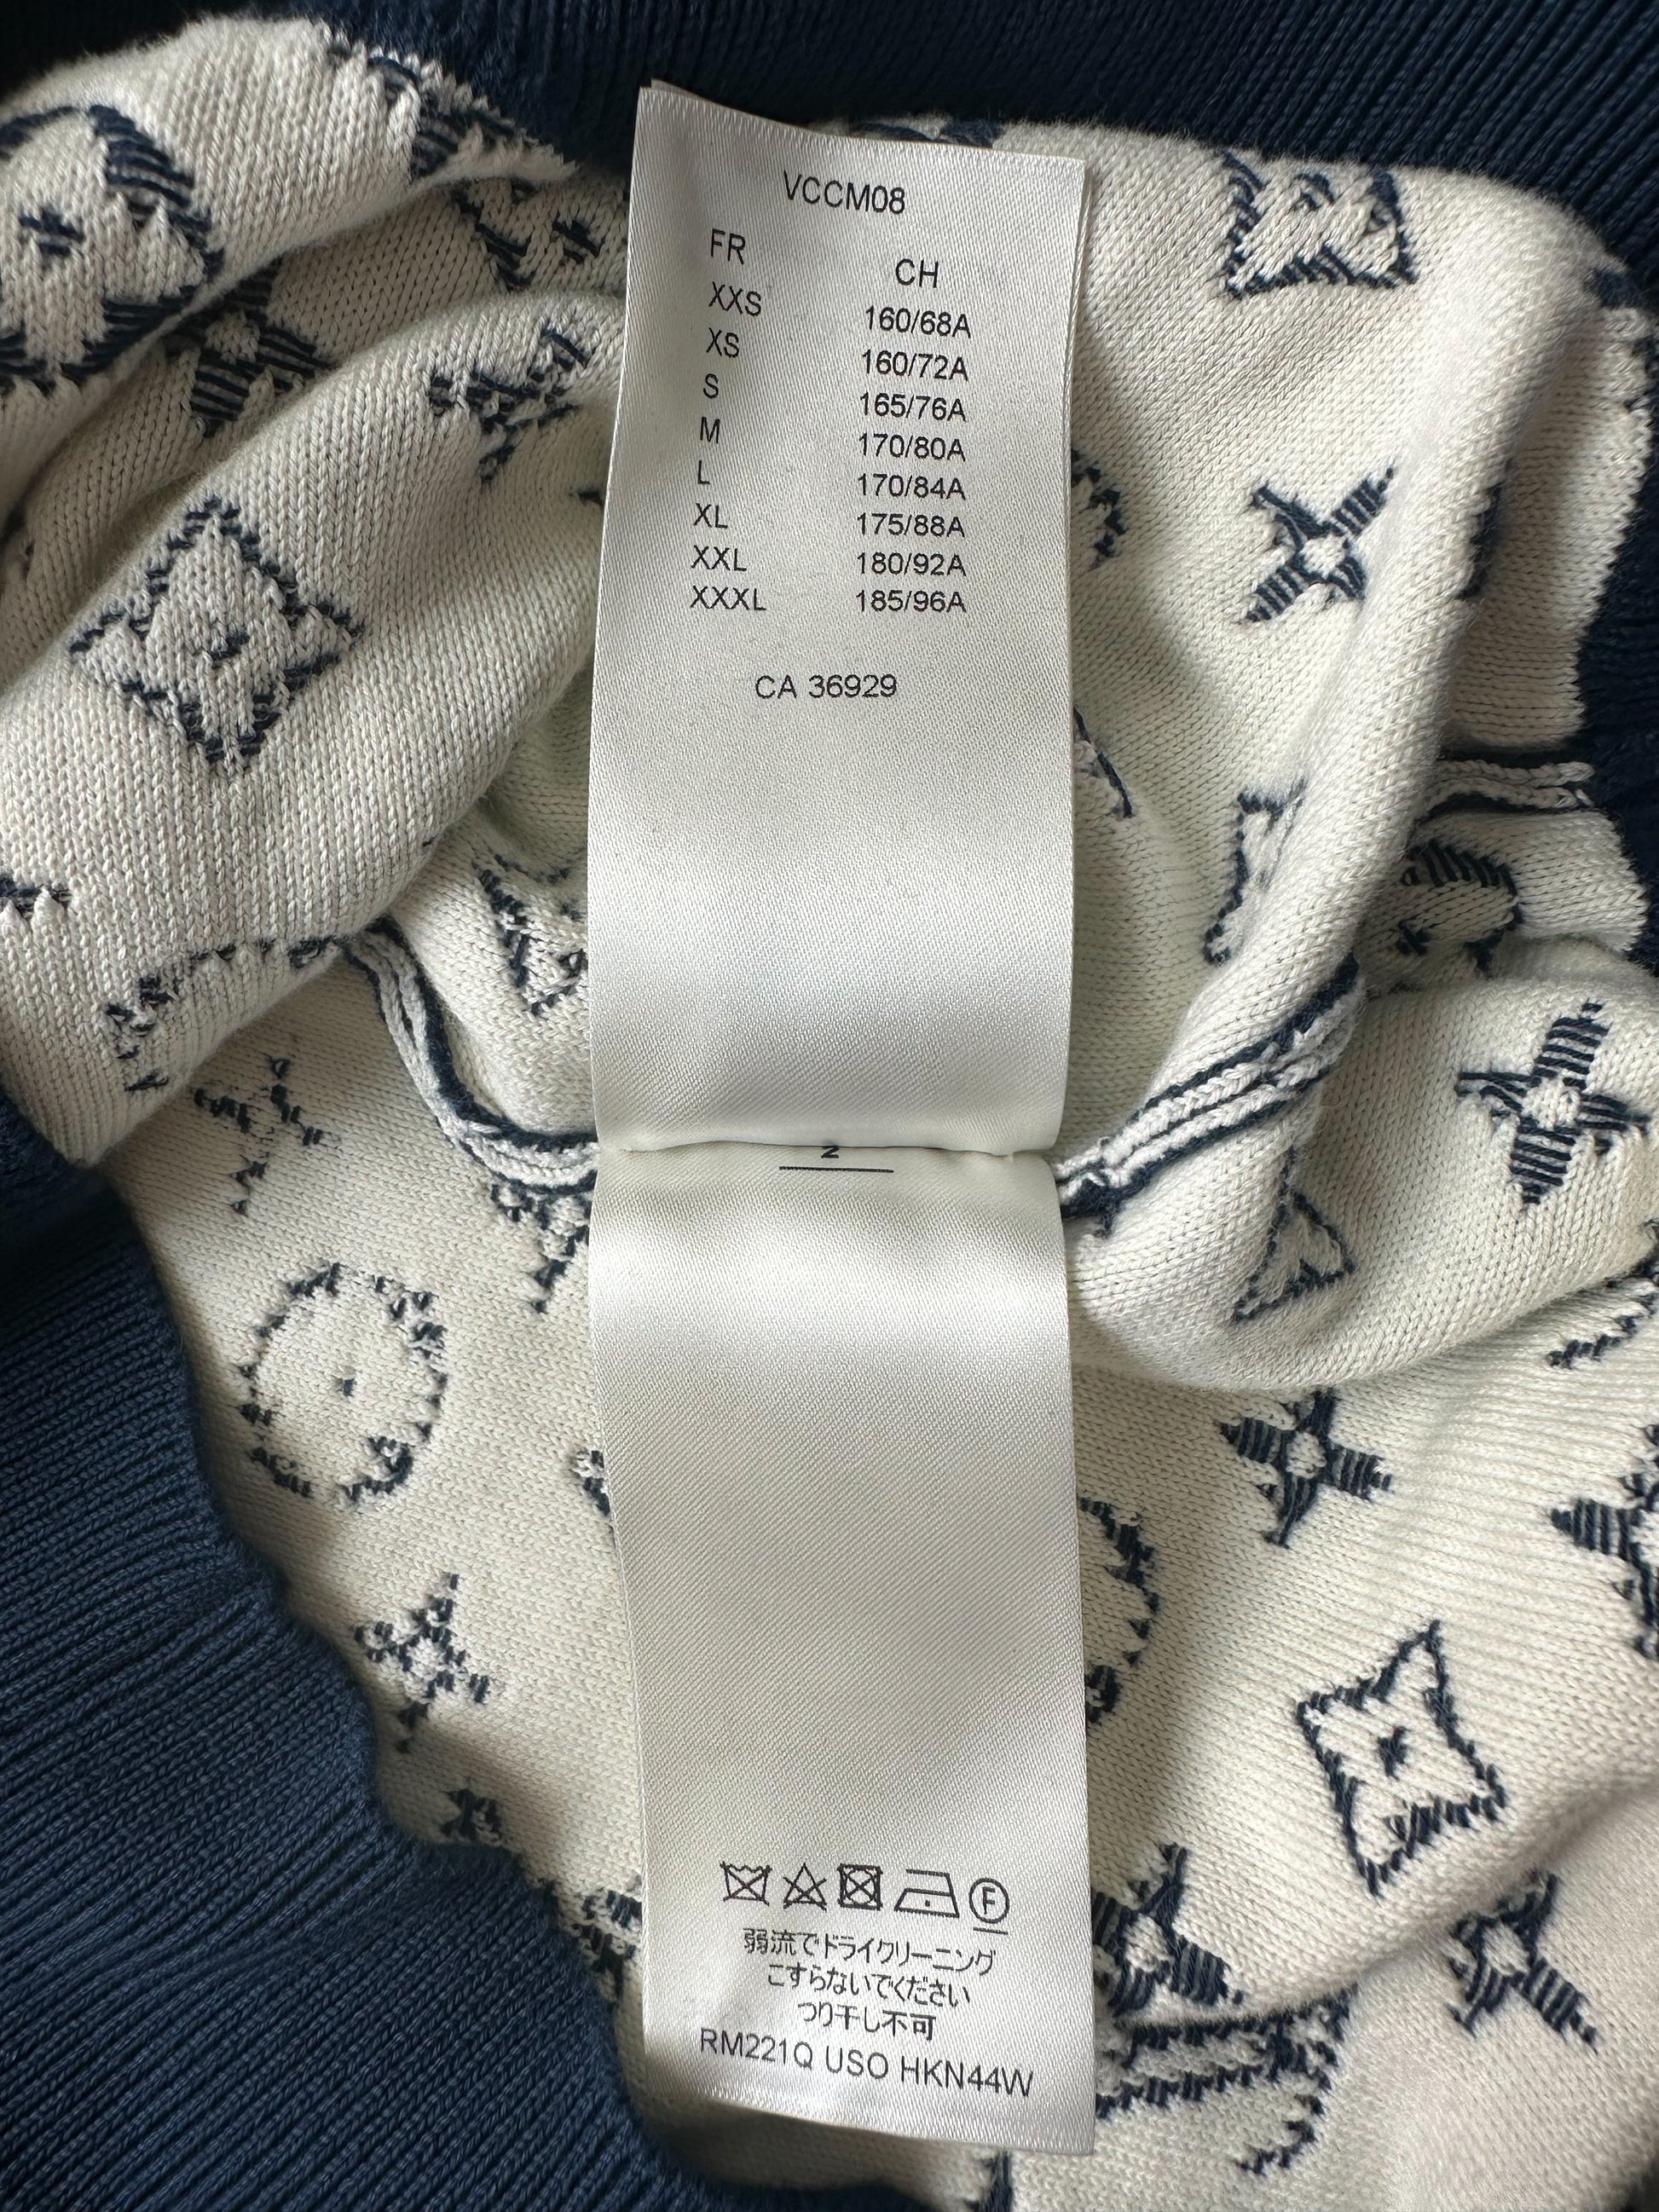 Louis Vuitton Navy & White Monogram Gradient Sweater